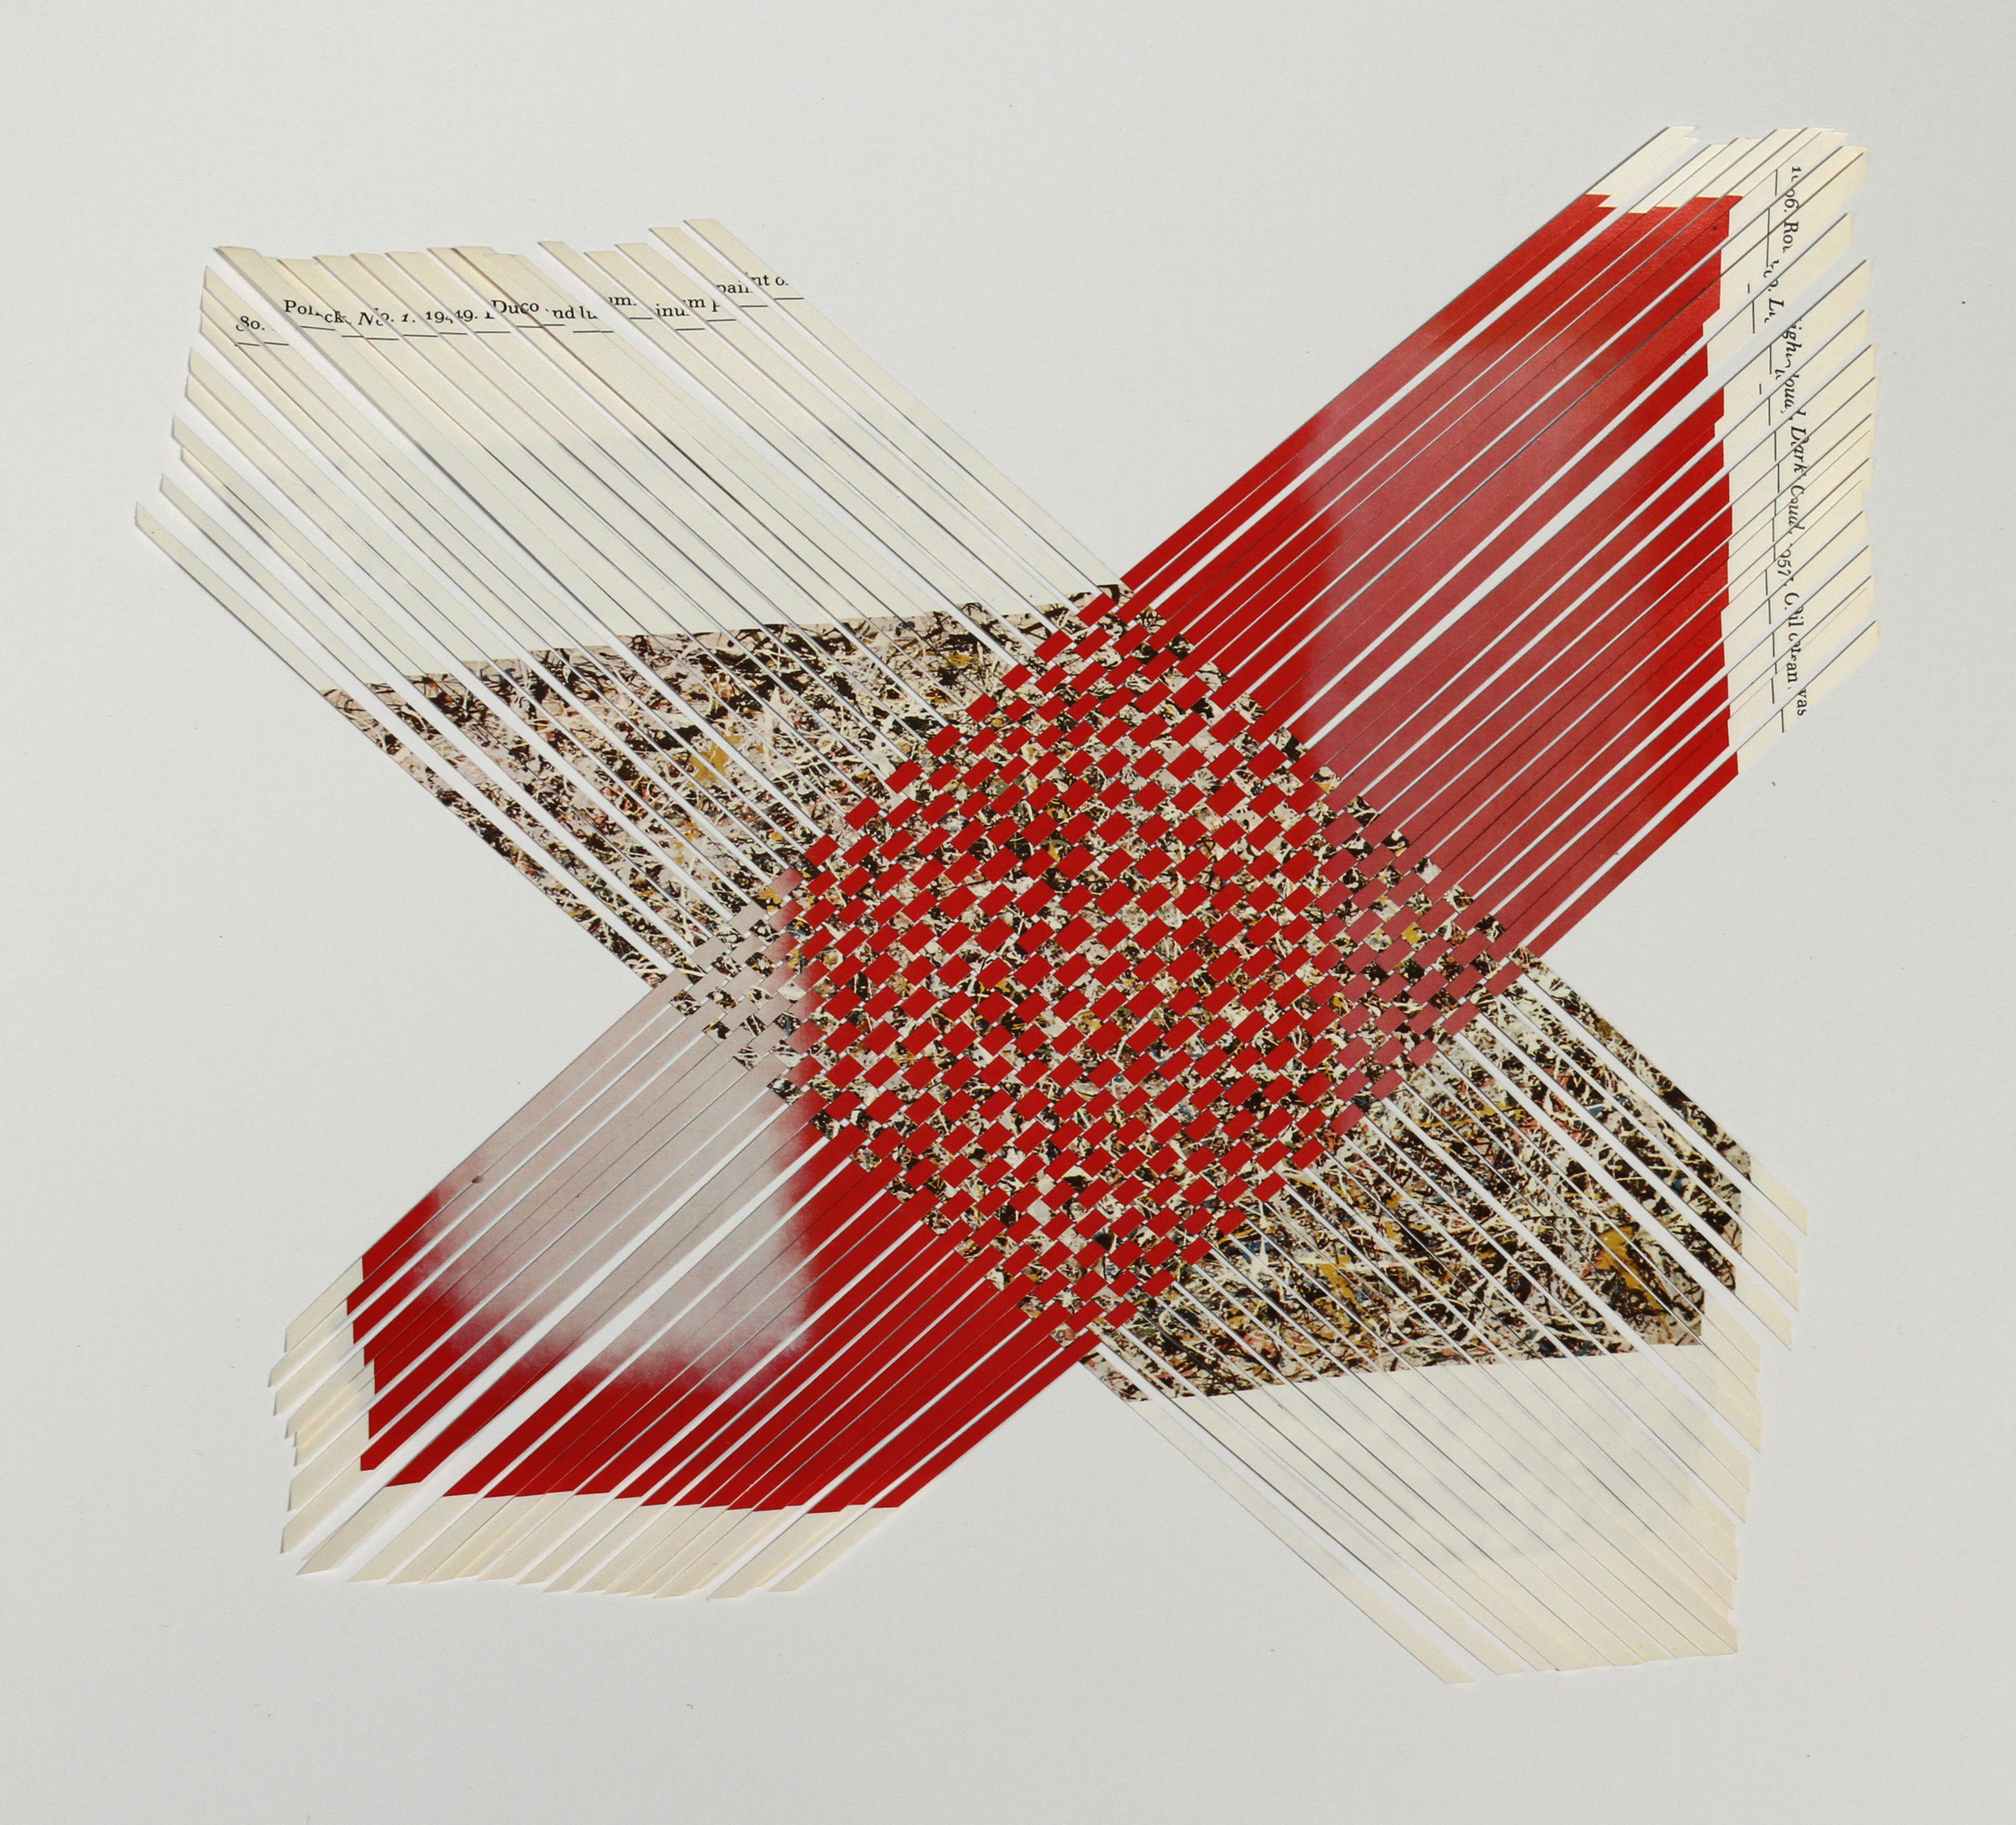 pollockrothko, 2013, paper weaving, 10 x 10